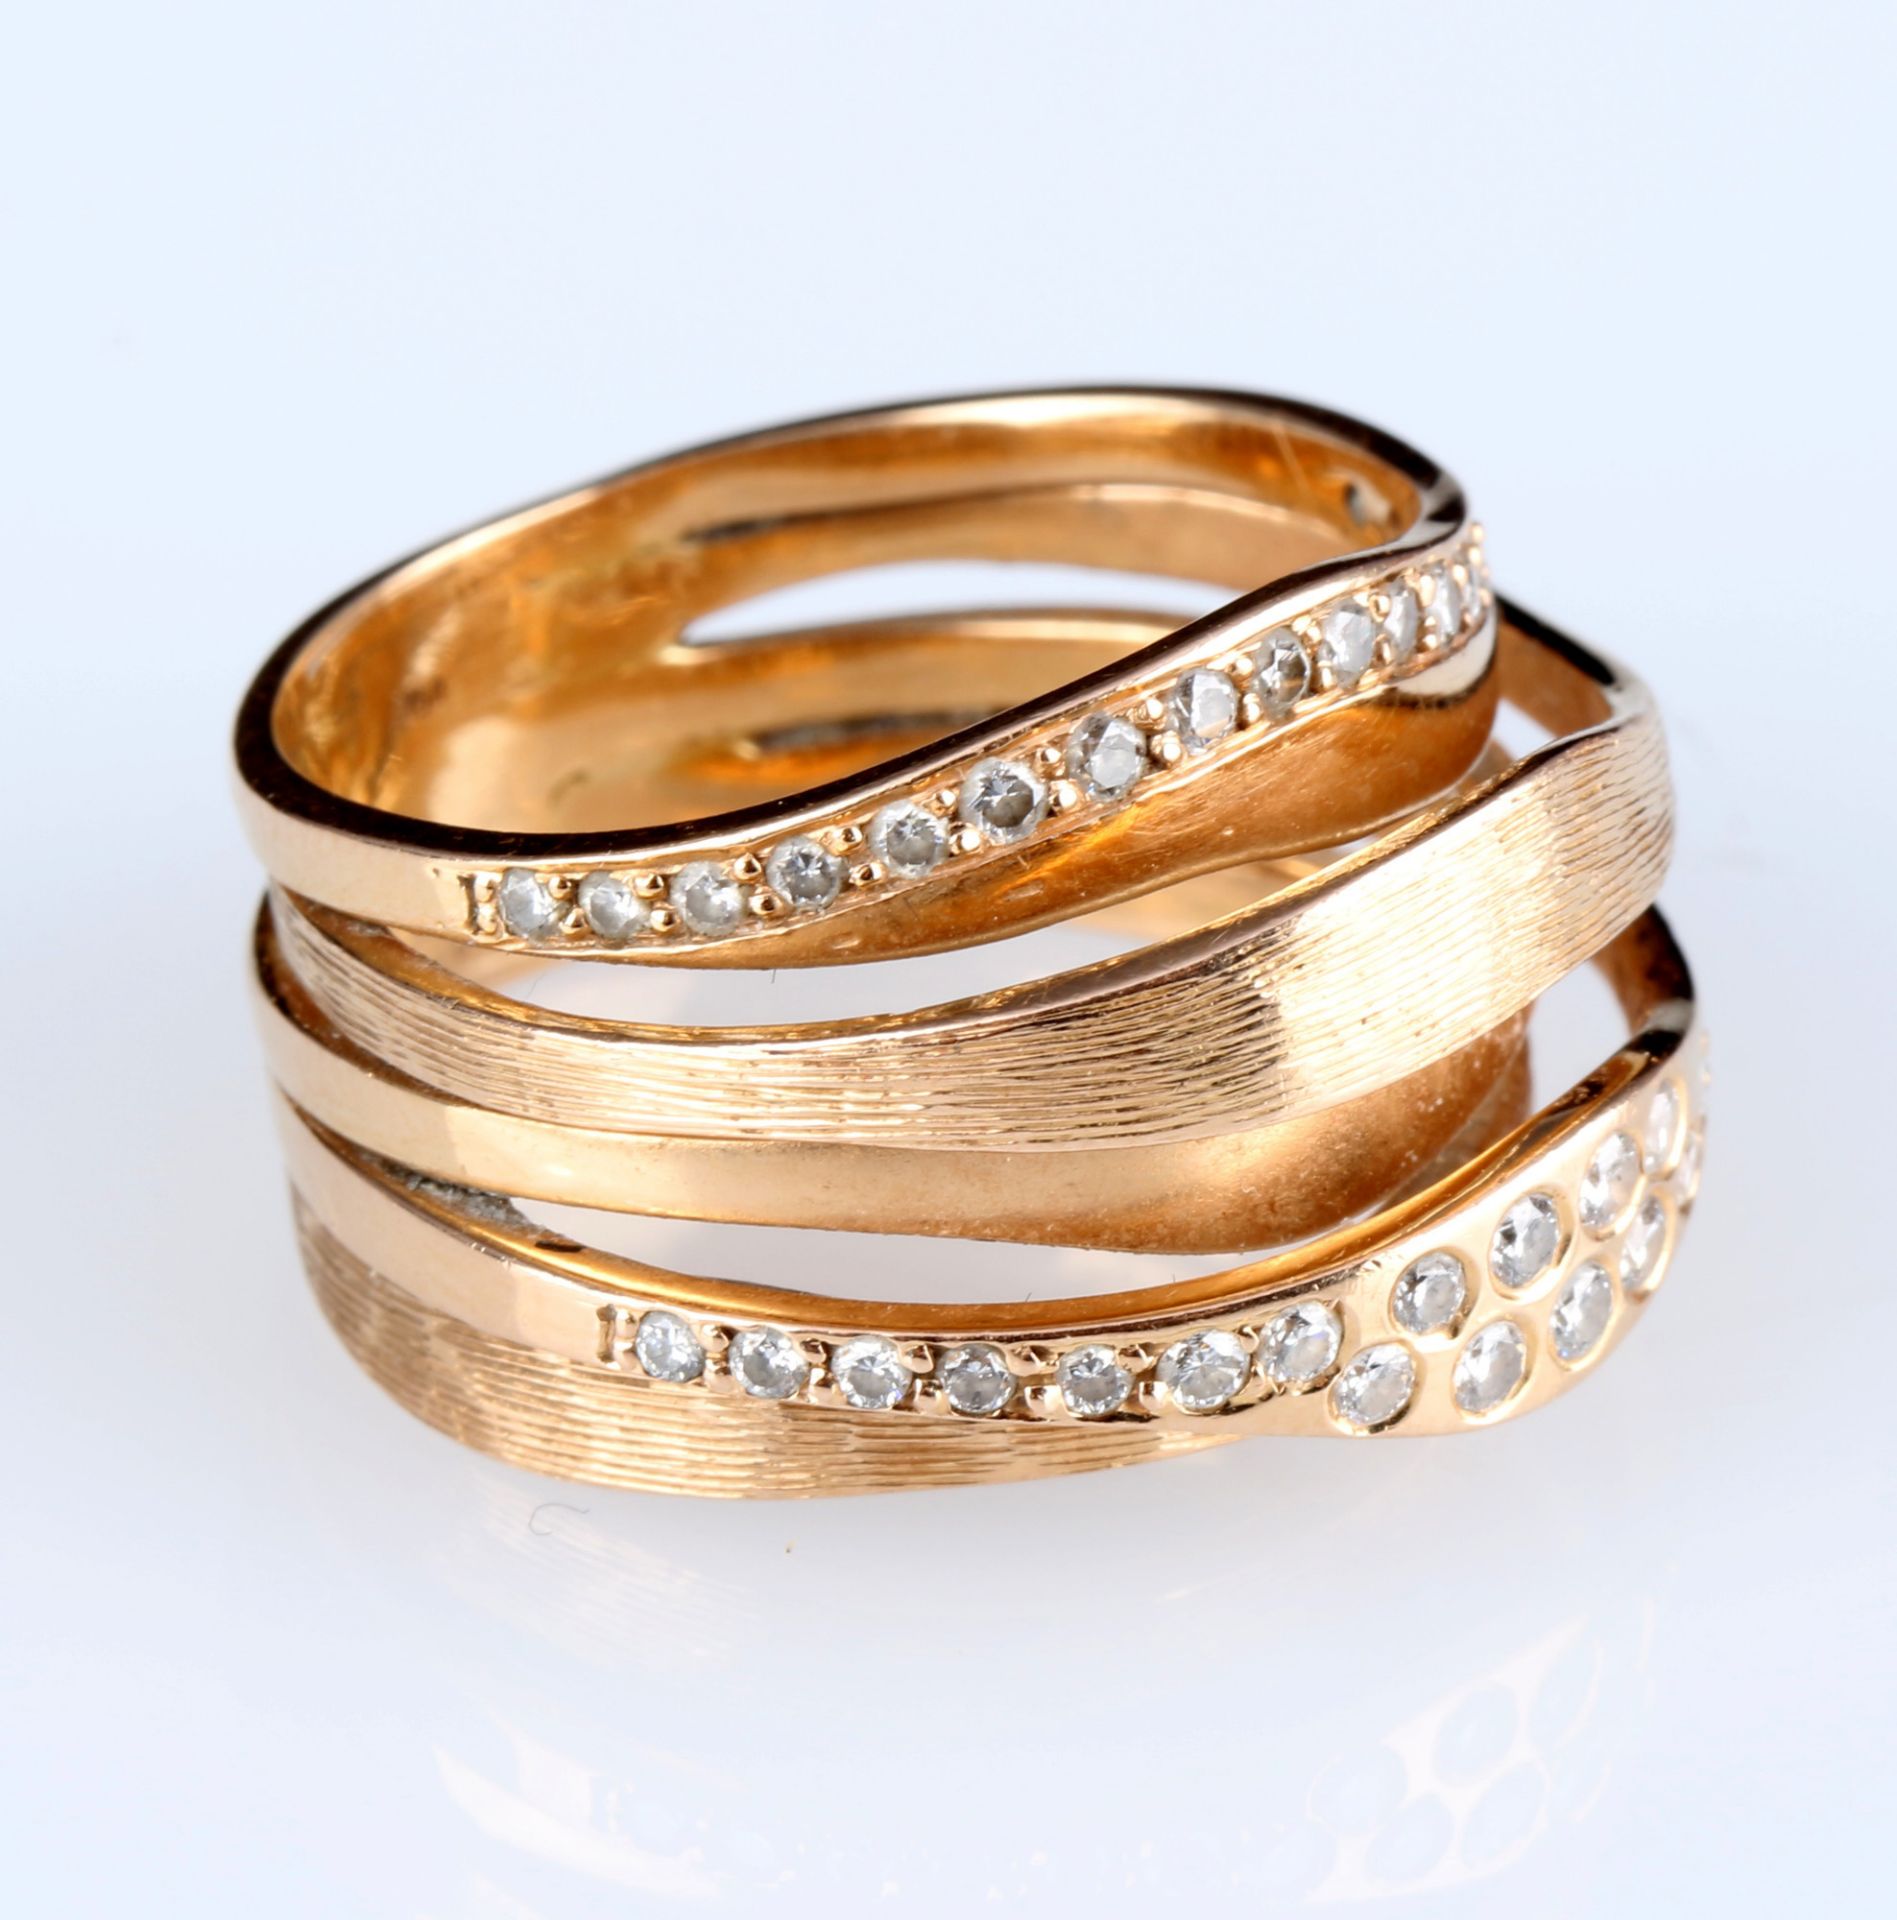 750 Gold Croisé Ring with Brilliant-Cut Diamonds, - Image 4 of 6